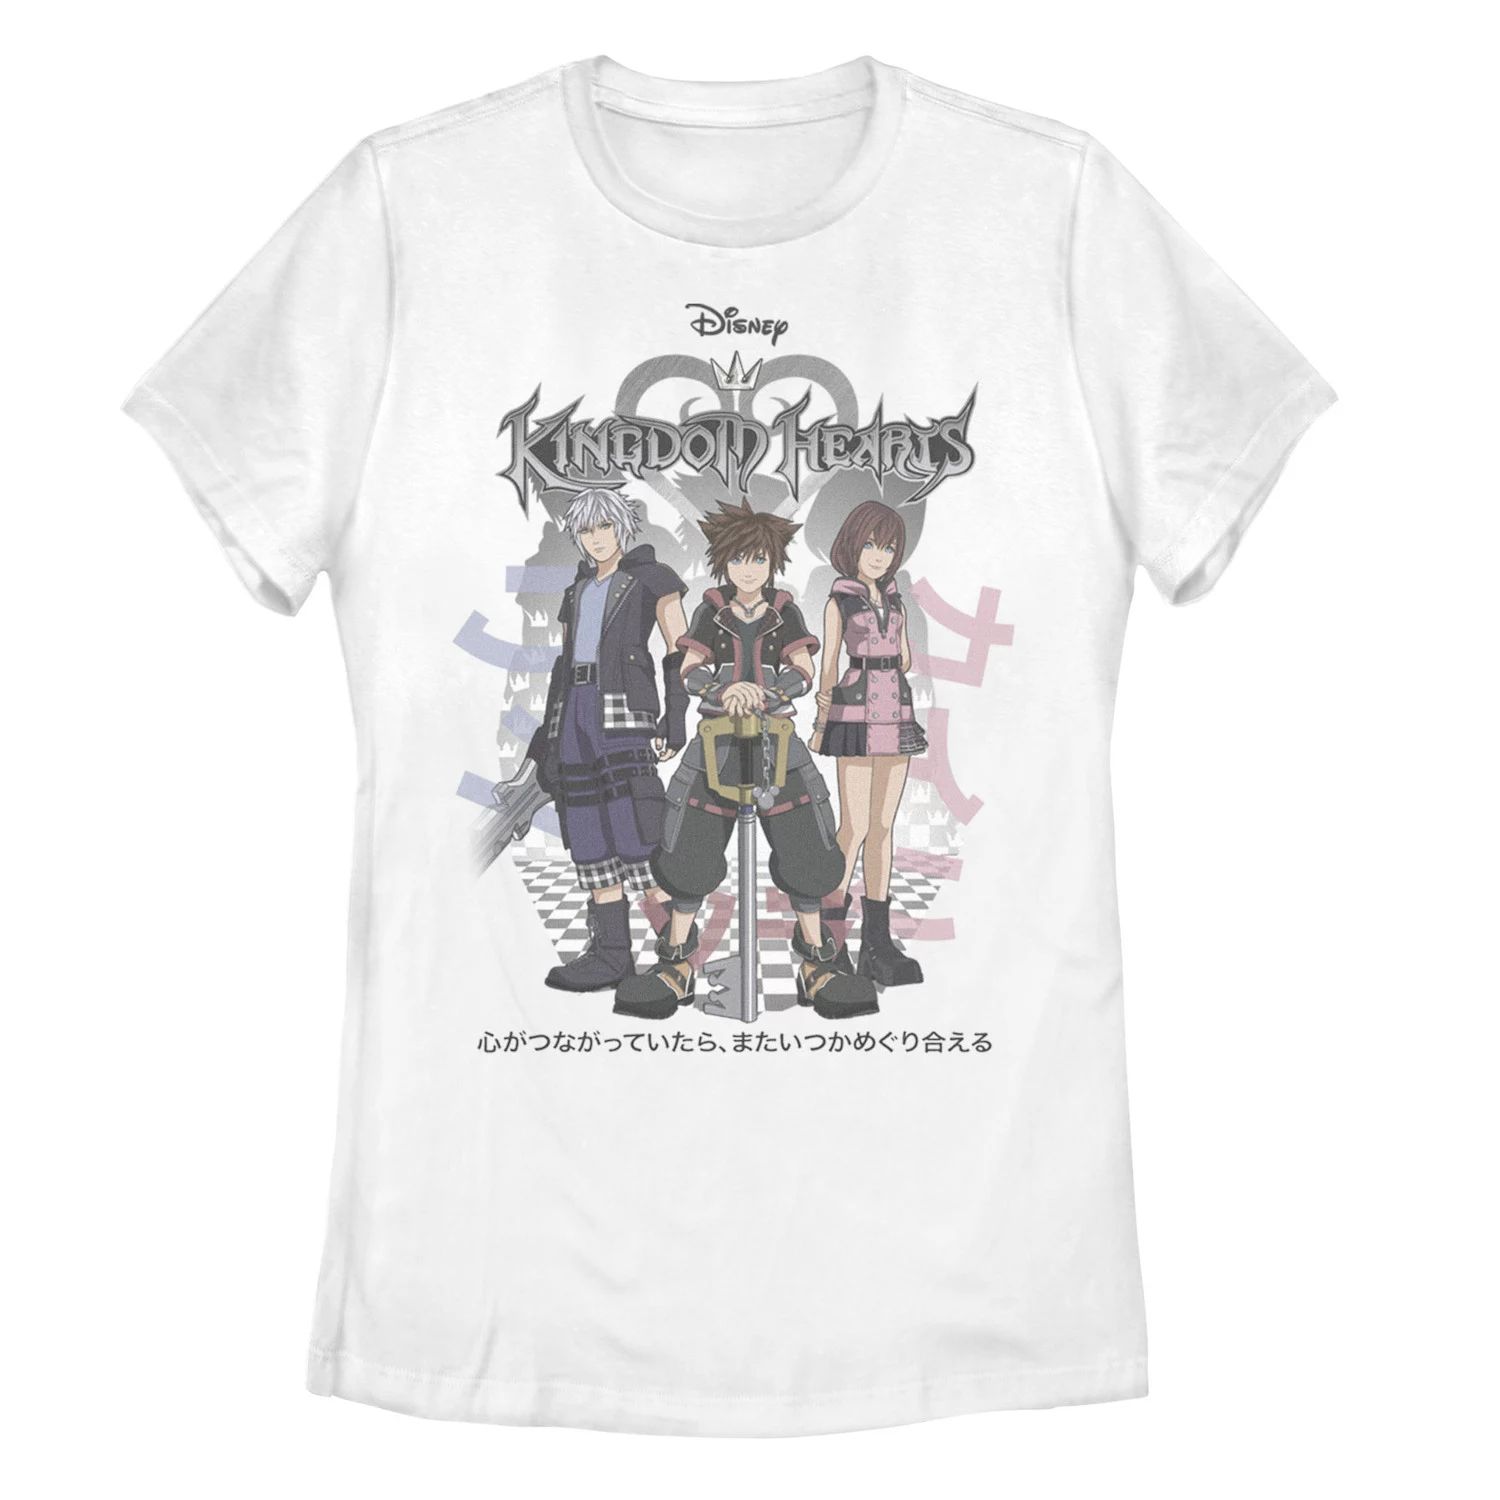 Детская футболка с рисунком Kingdom Hearts Sora Kanji Group Licensed Character